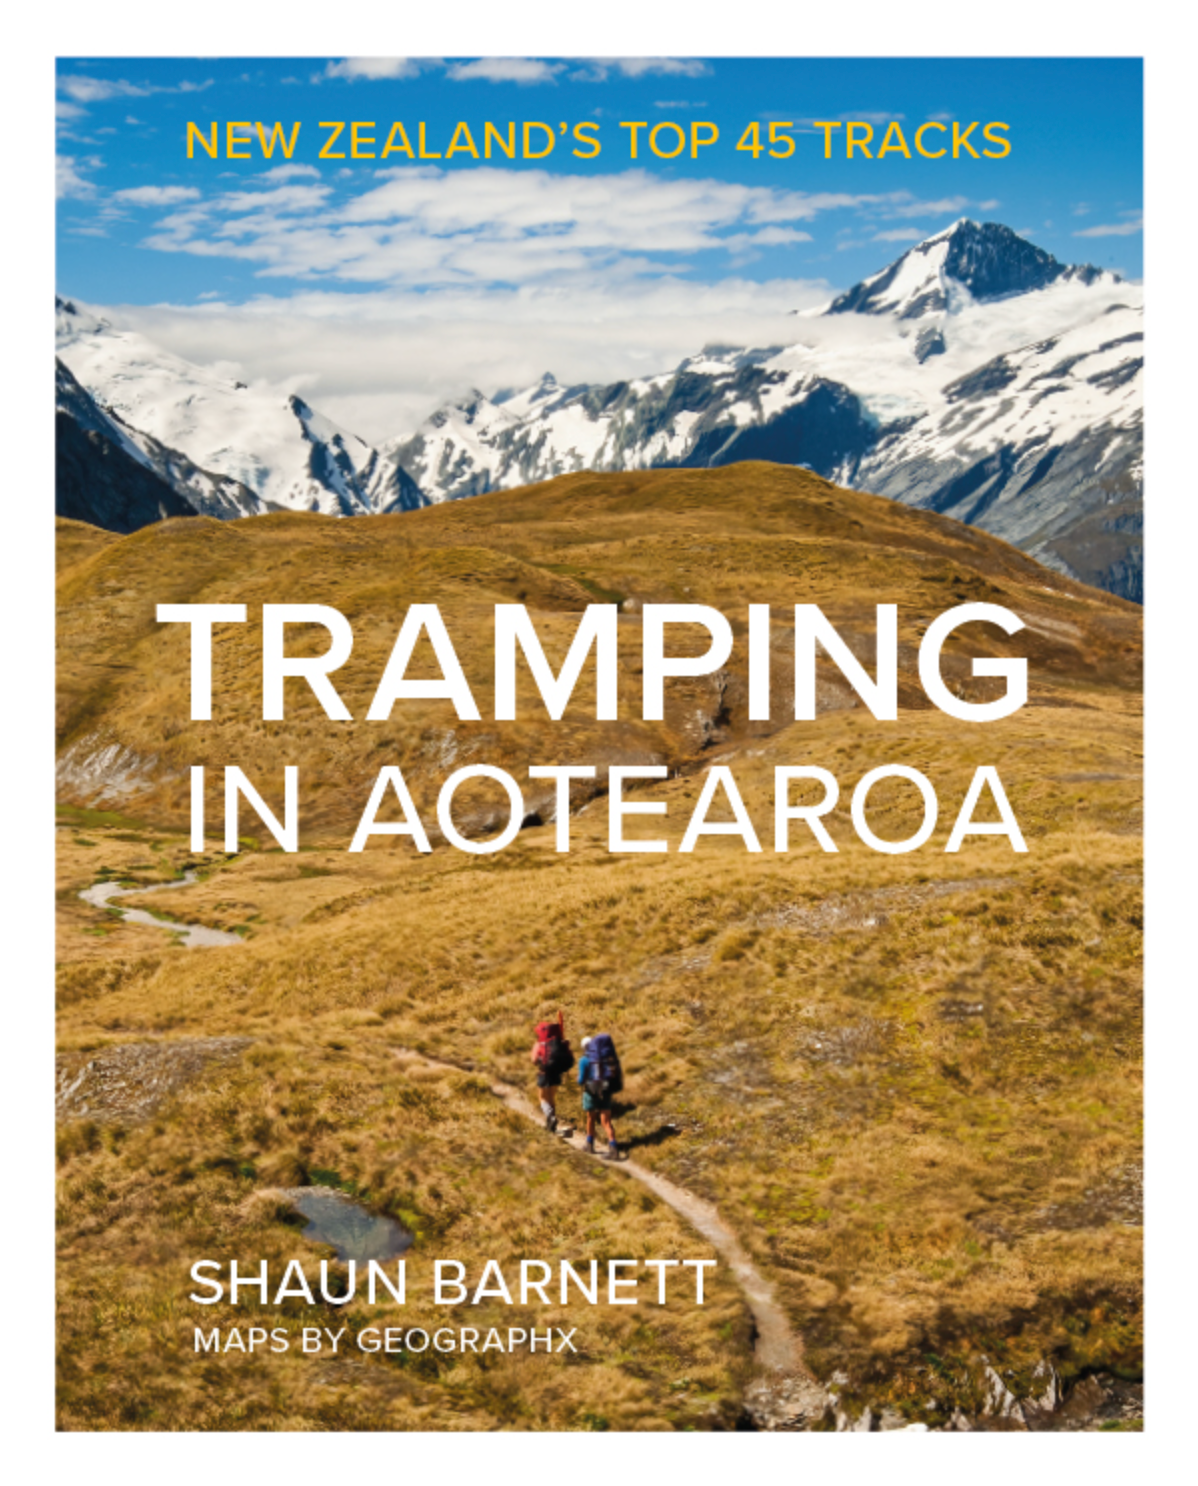 Tramping in Aotearoa cover image